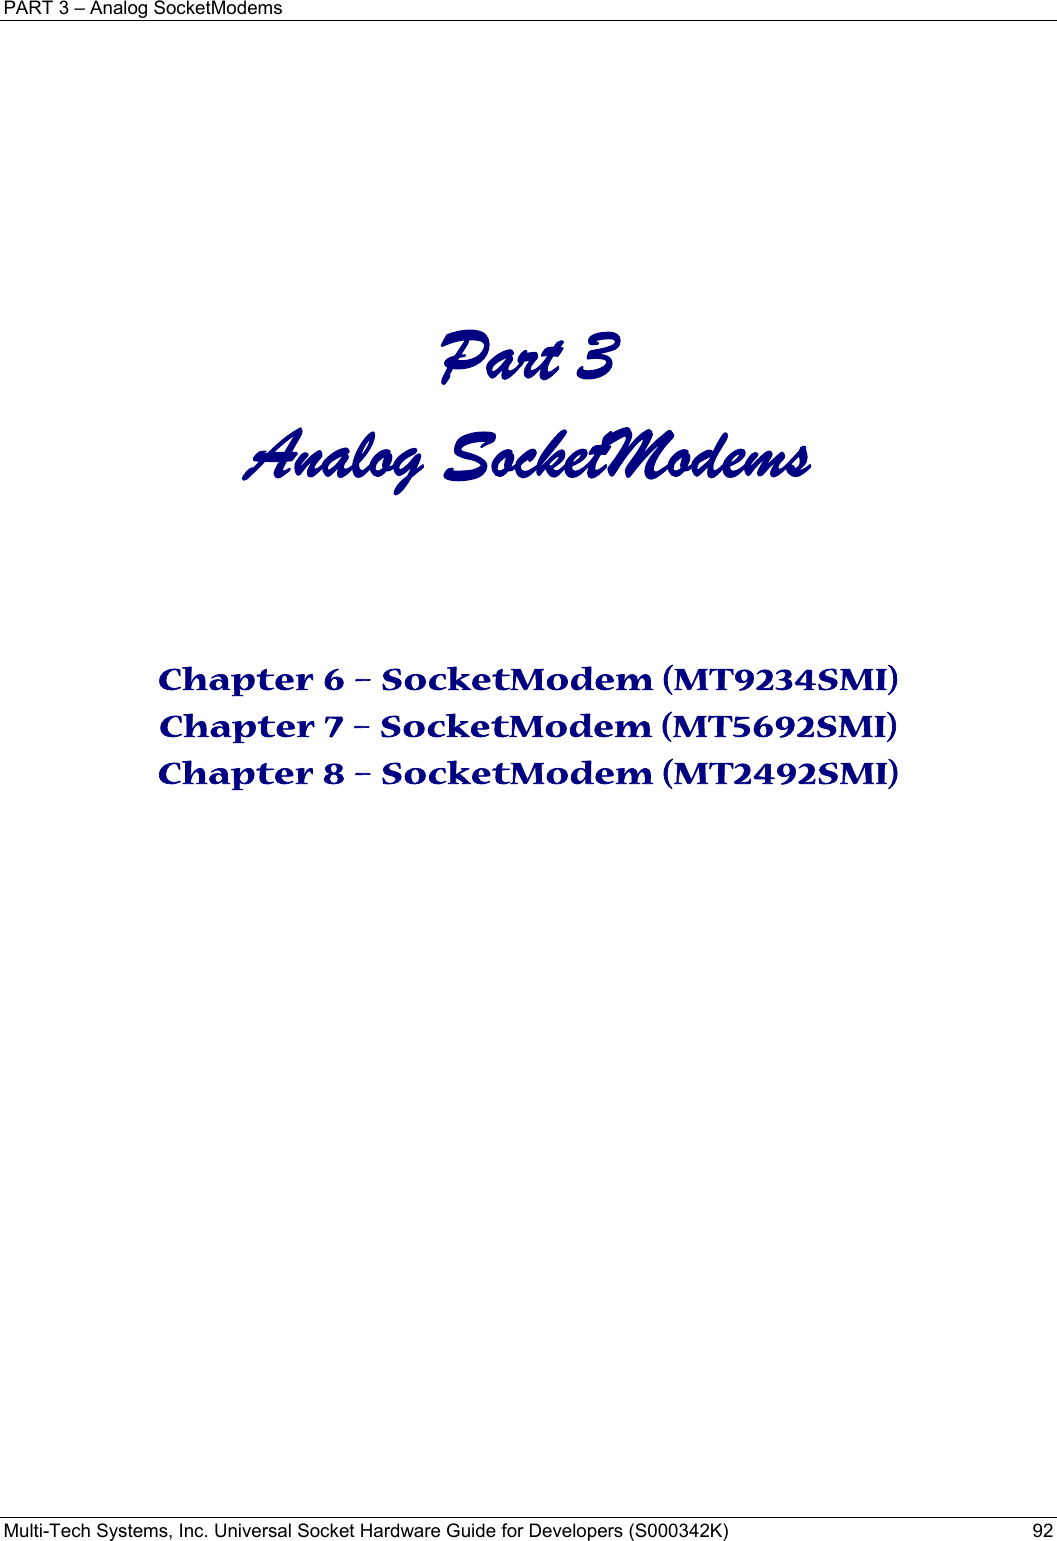 PART 3 – Analog SocketModems Multi-Tech Systems, Inc. Universal Socket Hardware Guide for Developers (S000342K)  92     Part 3 Analog SocketModems   Chapter 6 – SocketModem (MT9234SMI) Chapter 7 – SocketModem (MT5692SMI) Chapter 8 – SocketModem (MT2492SMI)   